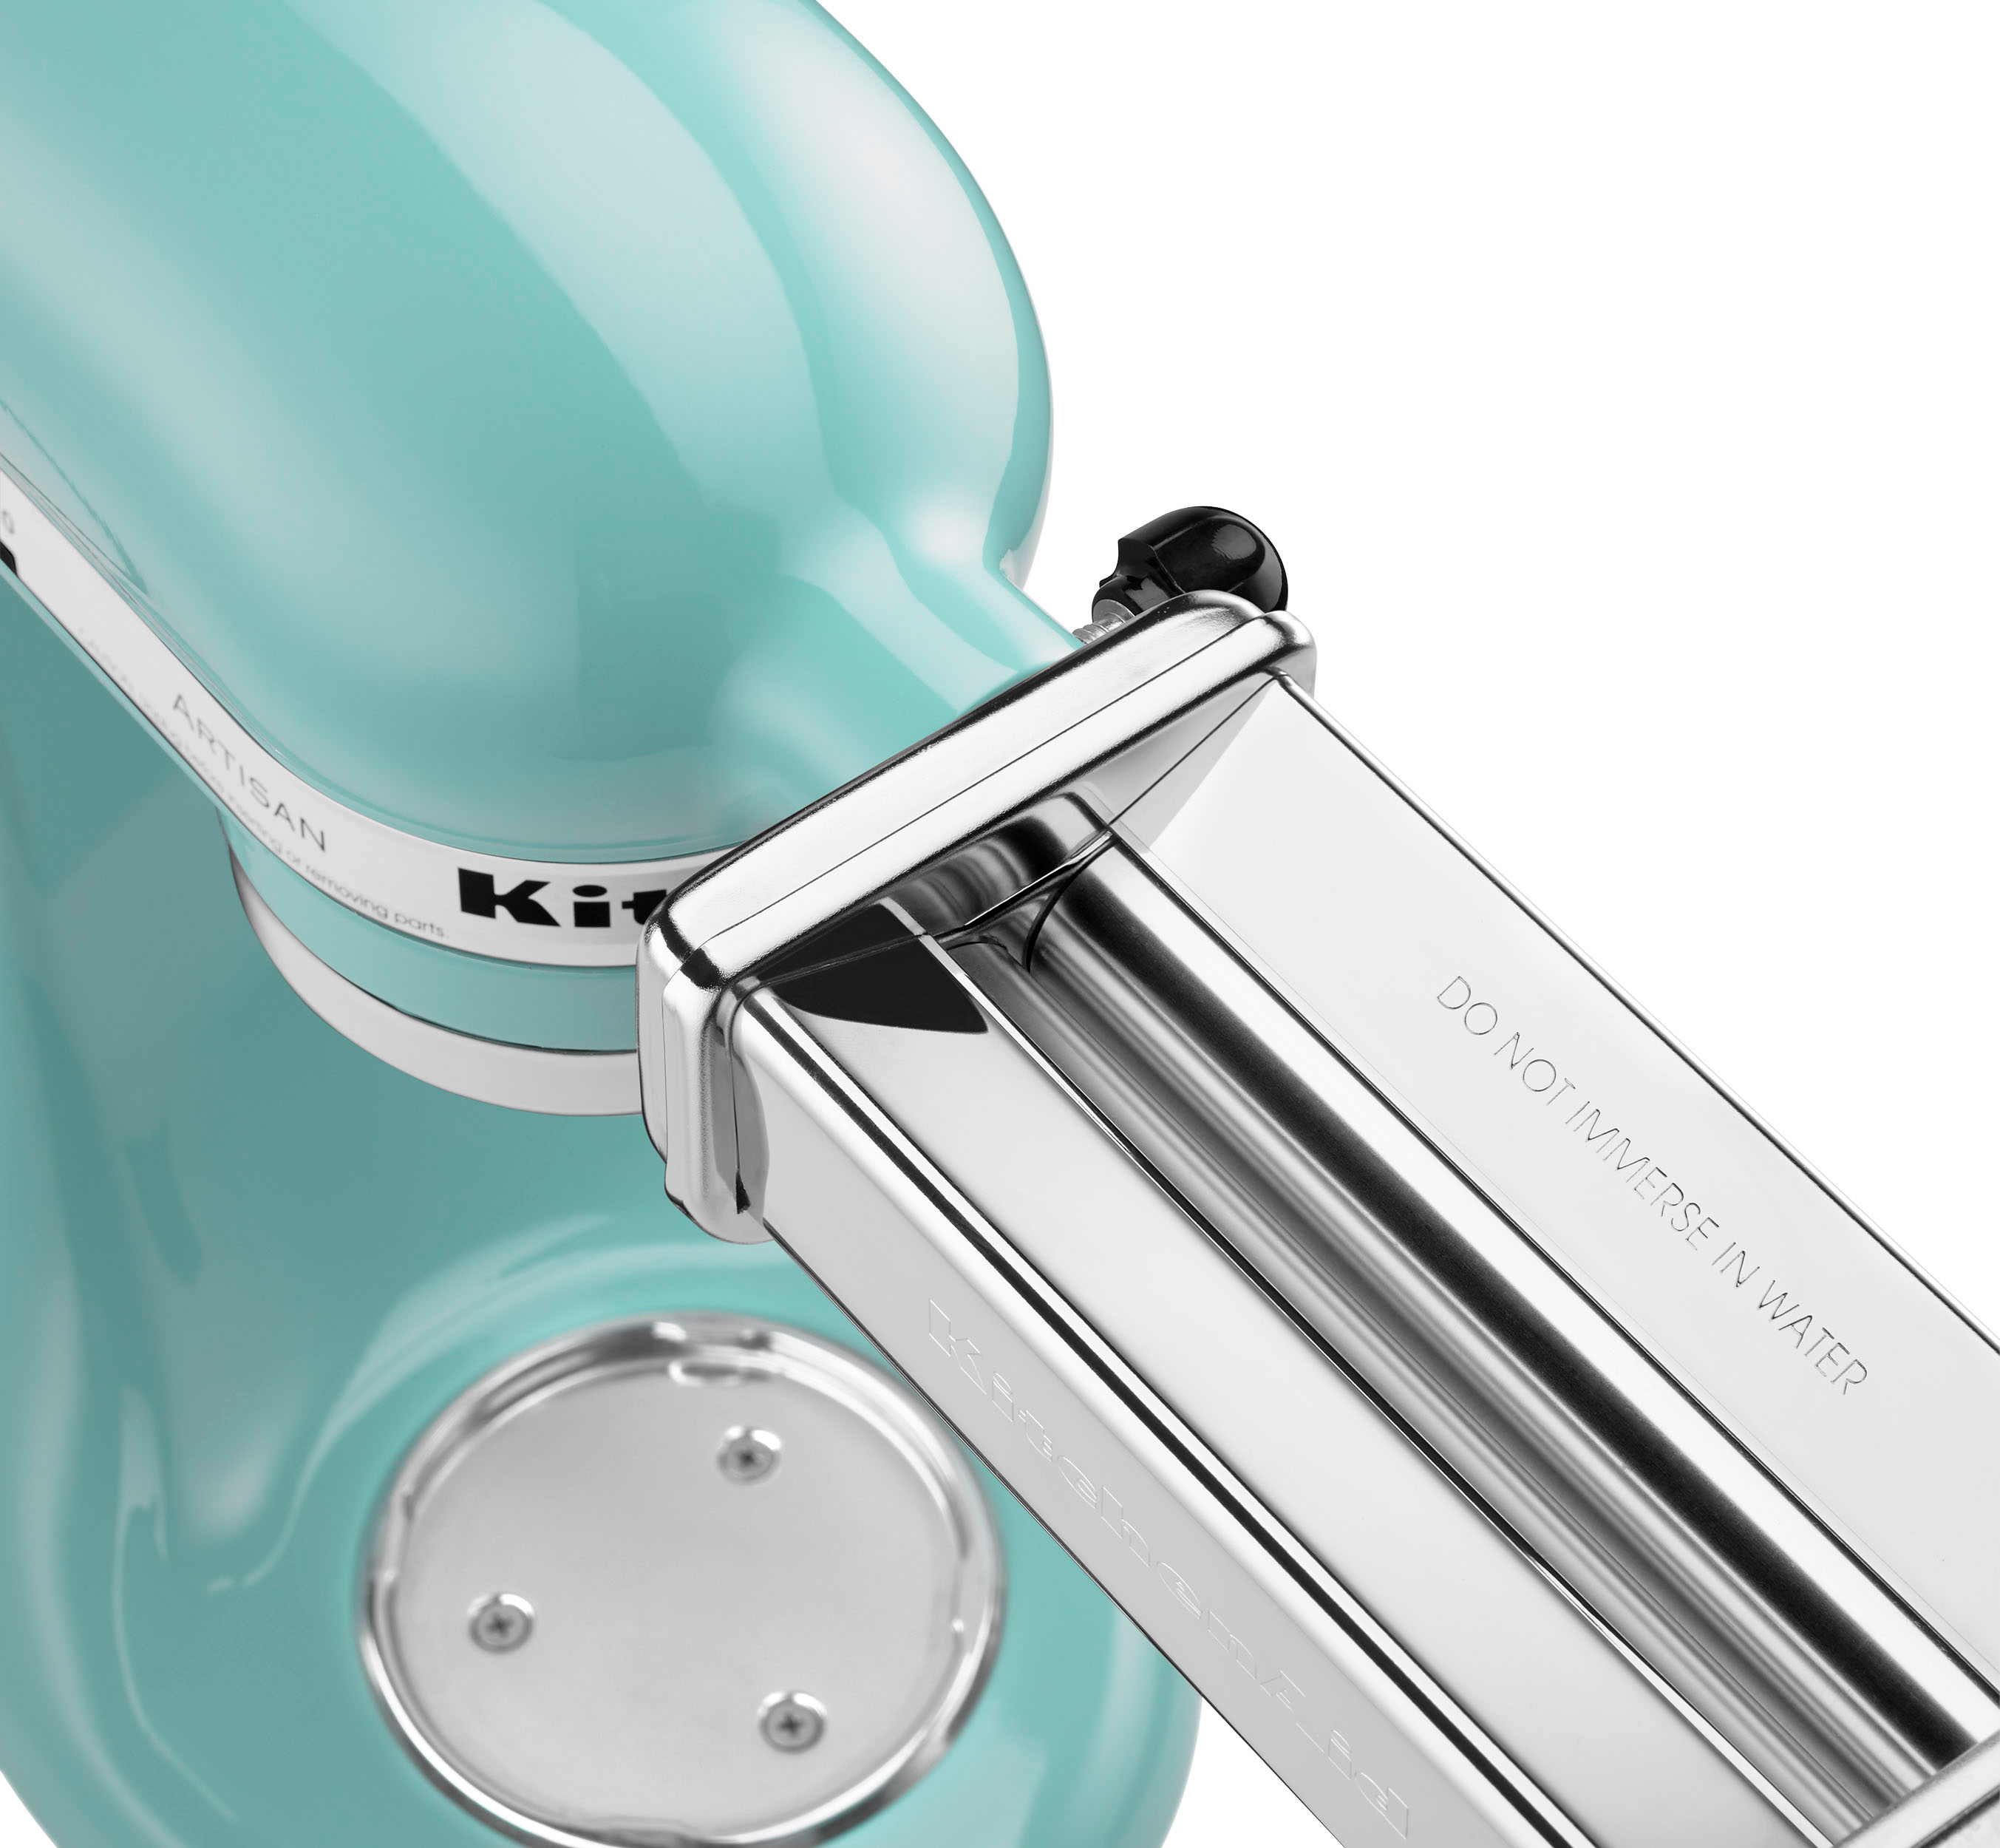 Best Buy: KitchenAid KSM150PSPK Artisan Series Tilt-Head Stand Mixer Pink  KSM150PSPK